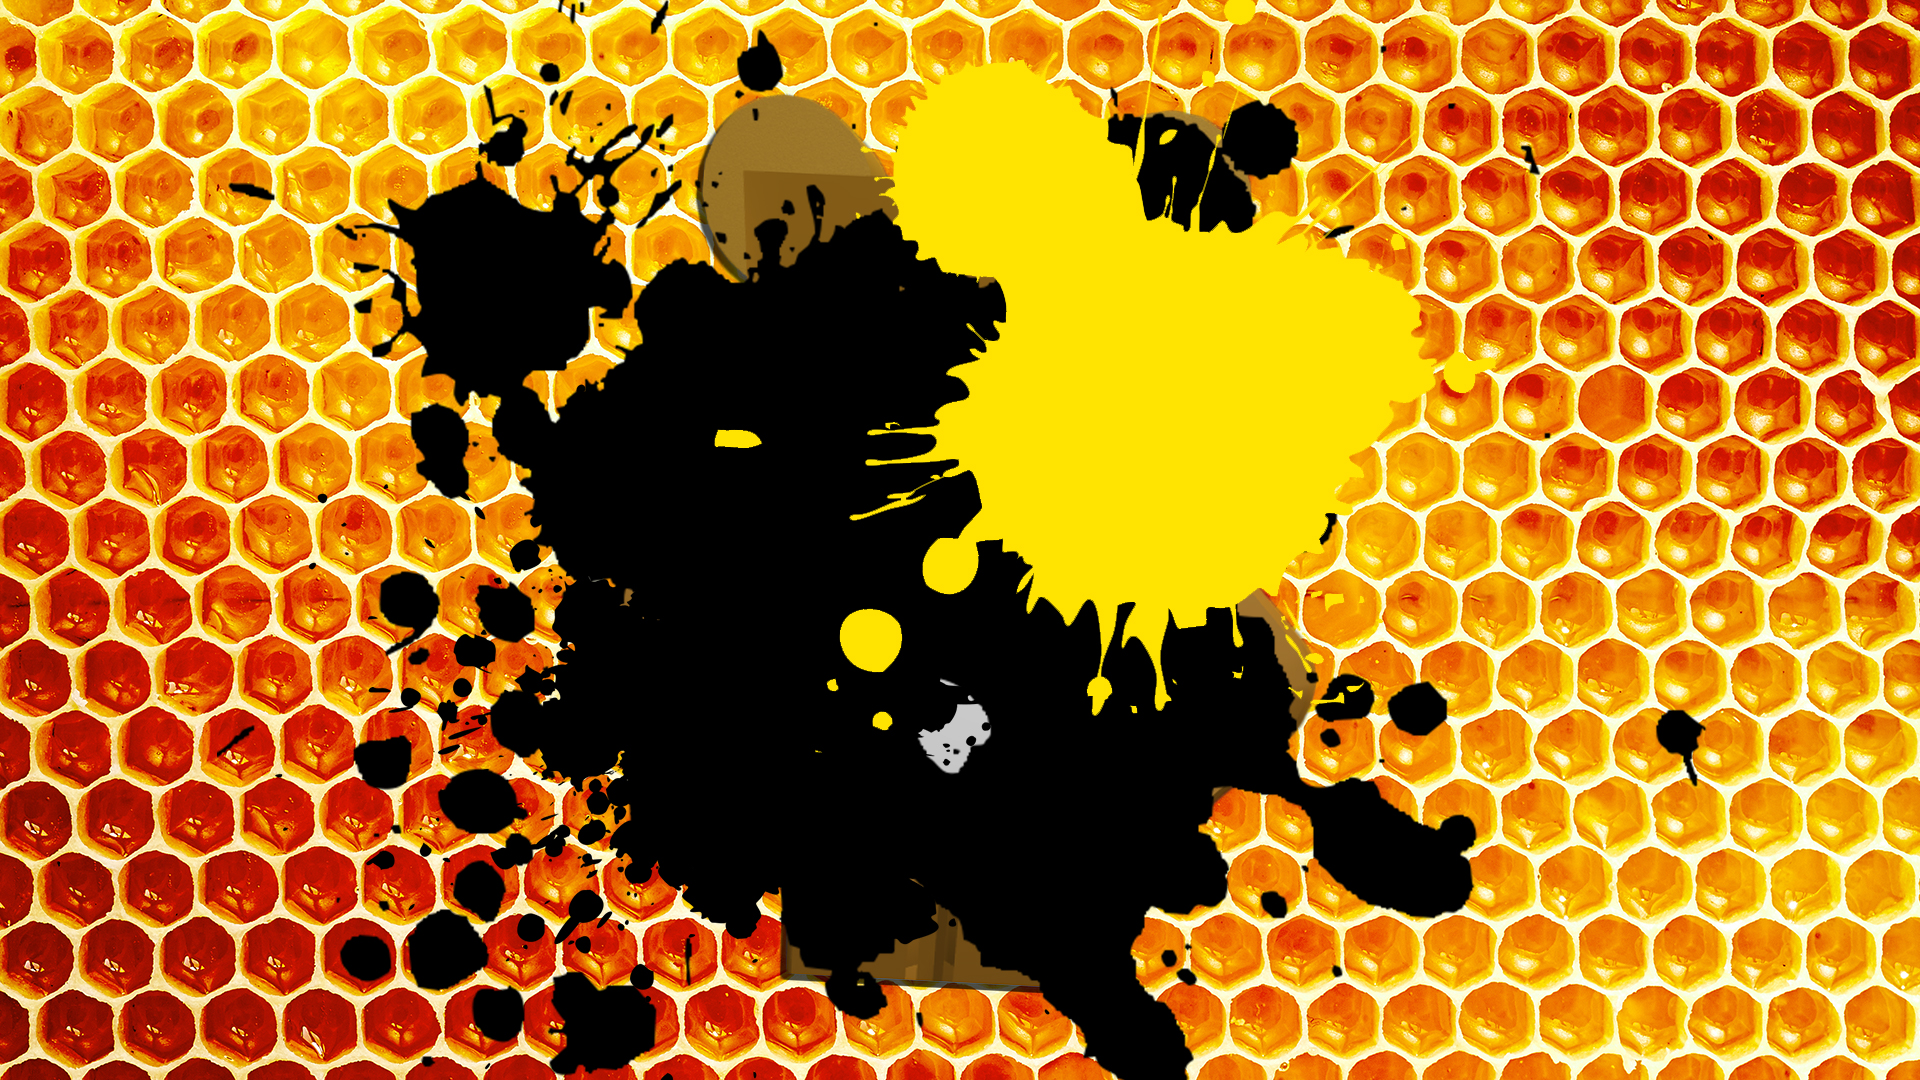 Test Your Bee Swarm Simulator Knowledge! - ProProfs Quiz